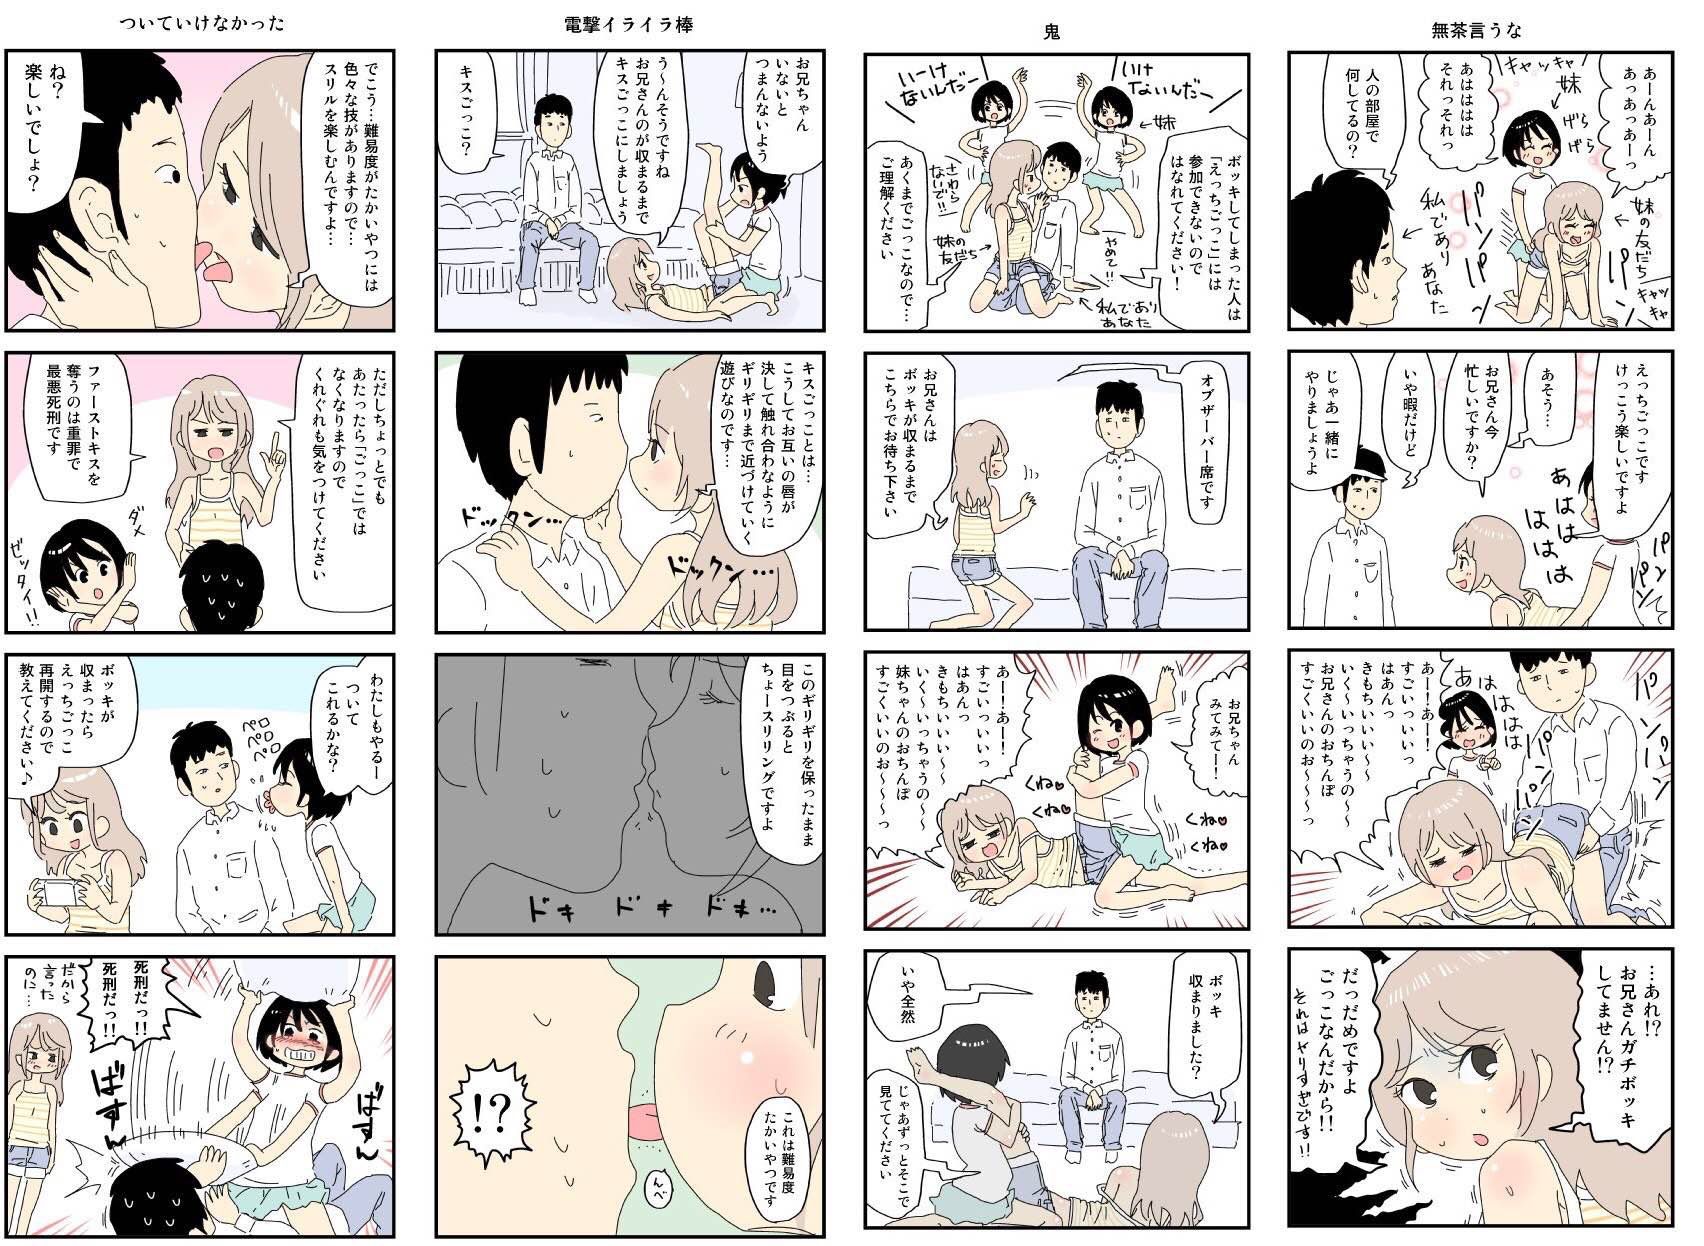 [Image] JK-san plays pranks with other women during recess 10